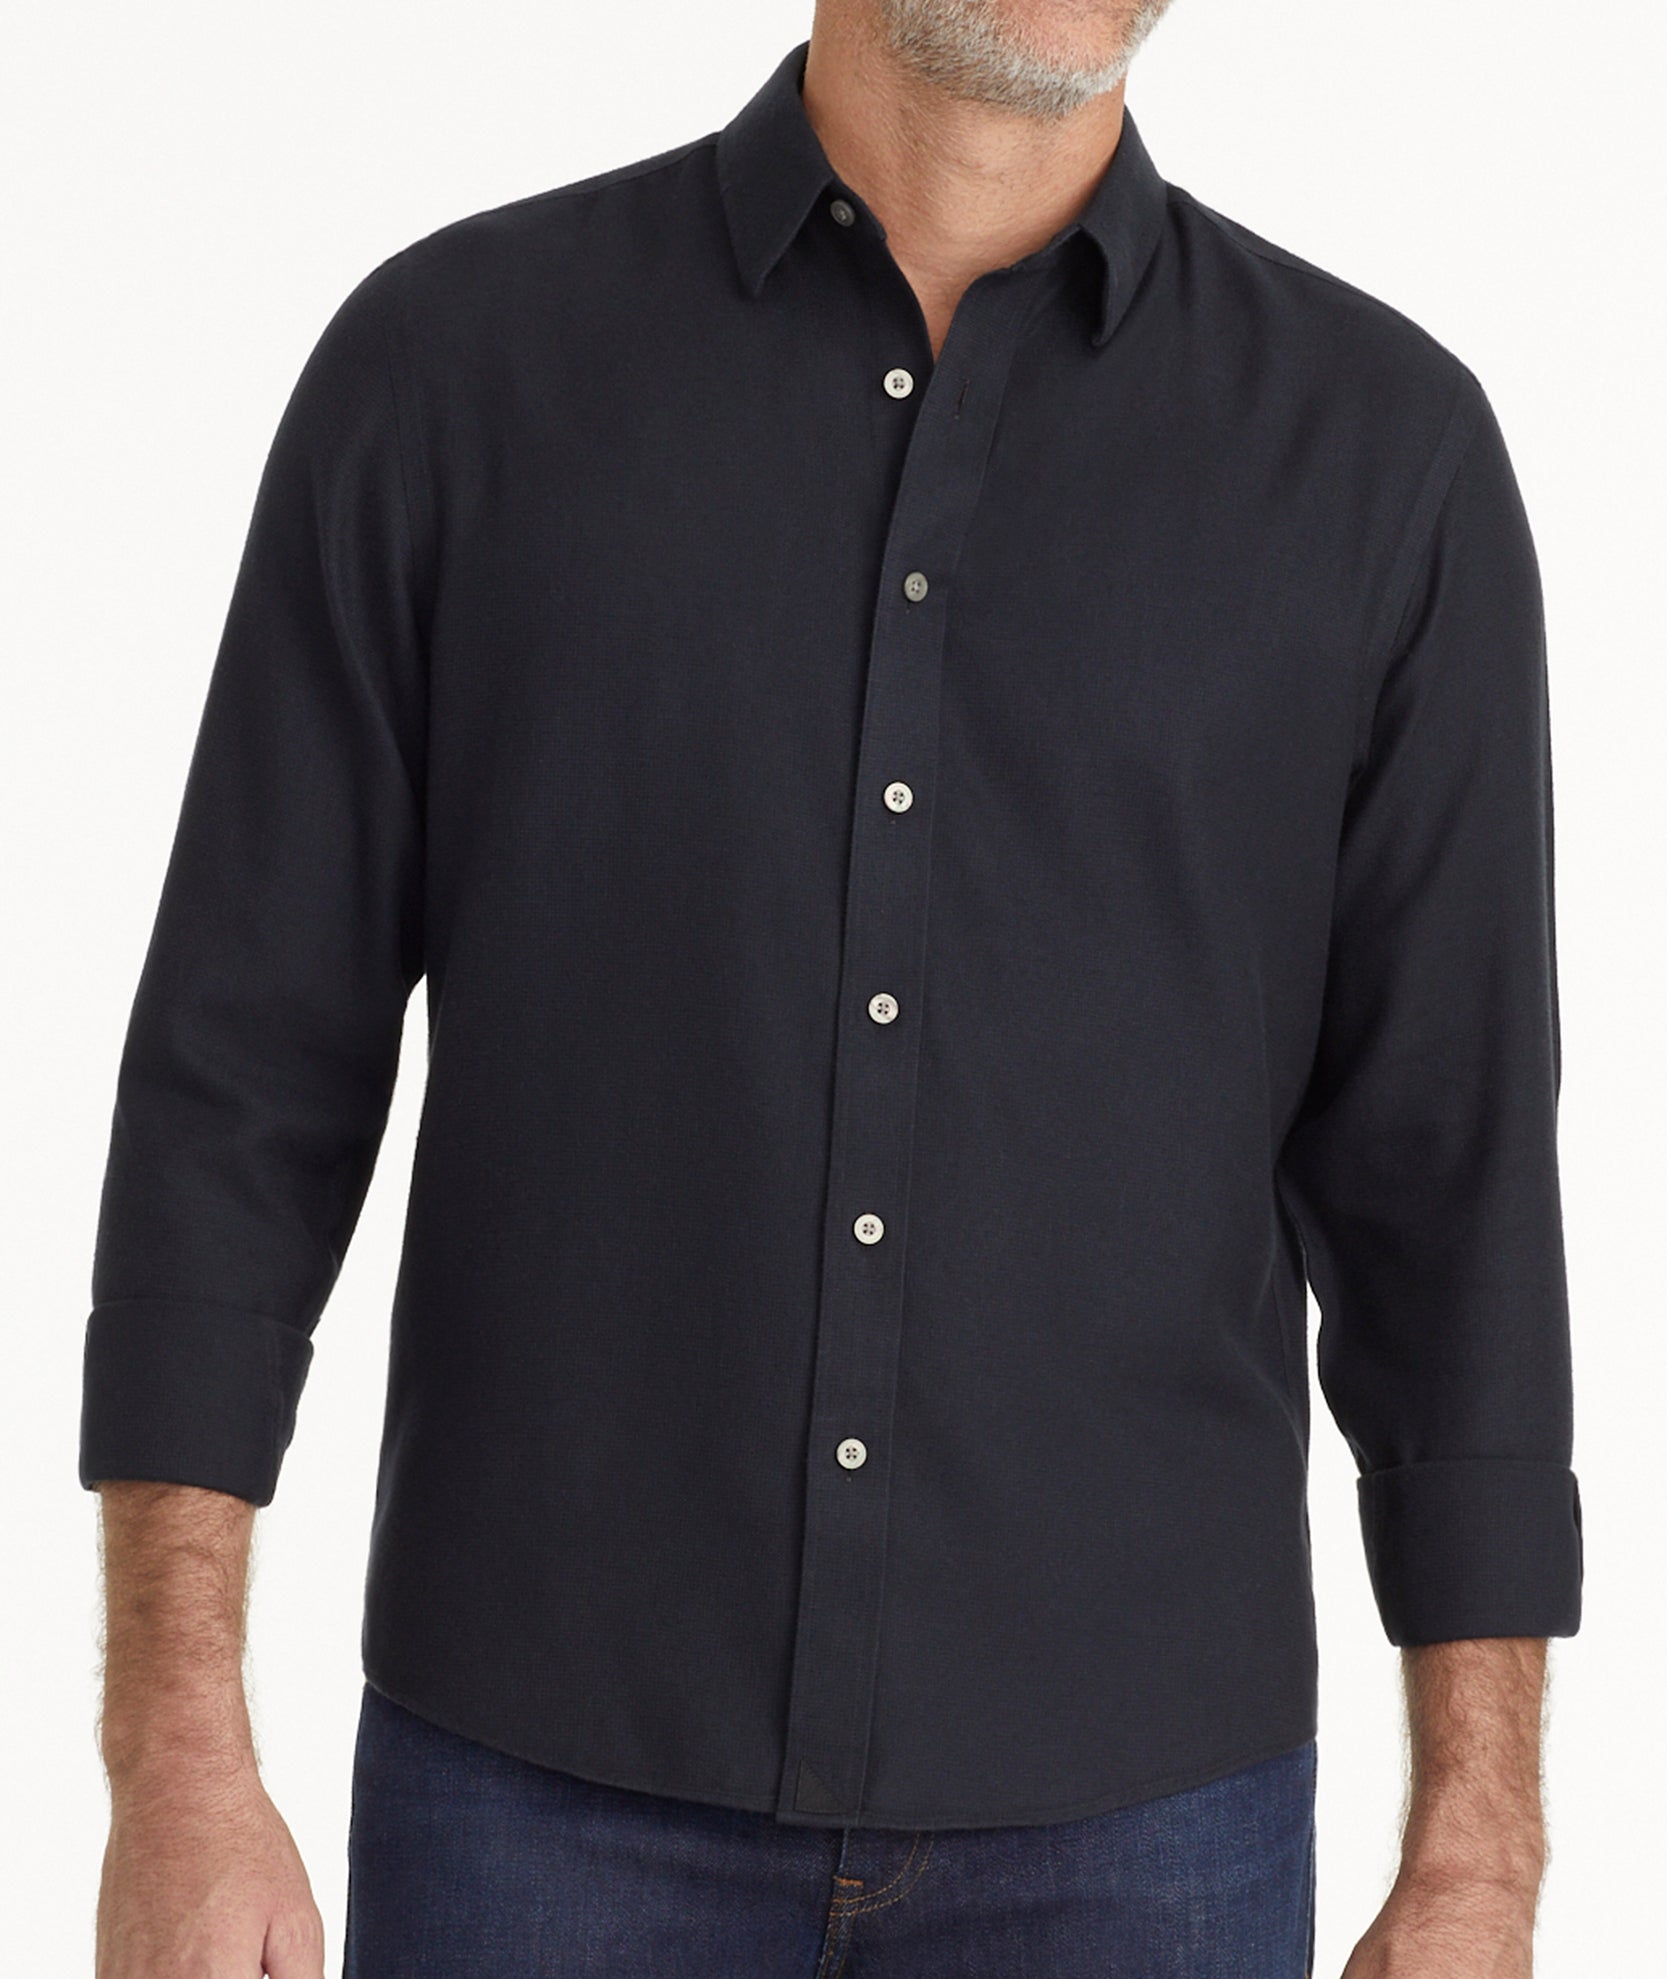 Black Veneto | UNTUCKit Wrinkle-Free Solid Shirt